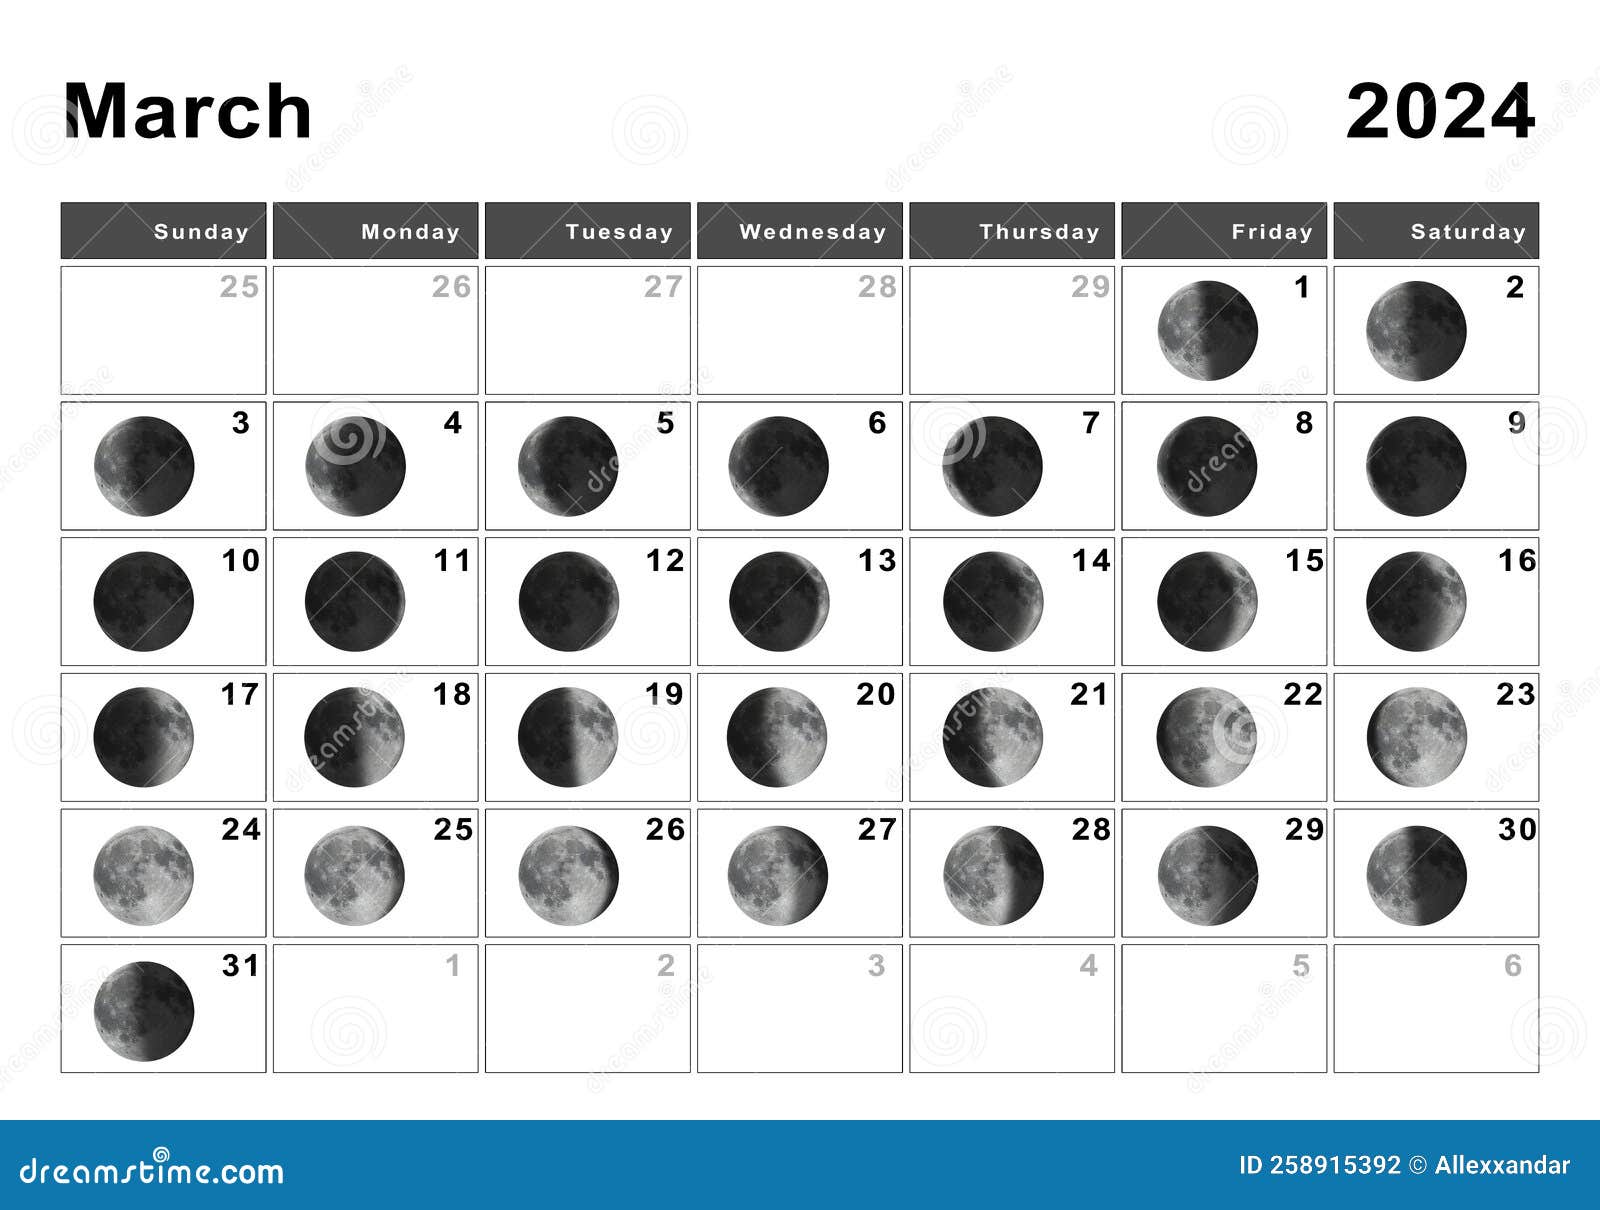 March 2024 Lunar Calendar, Moon Cycles Stock Illustration